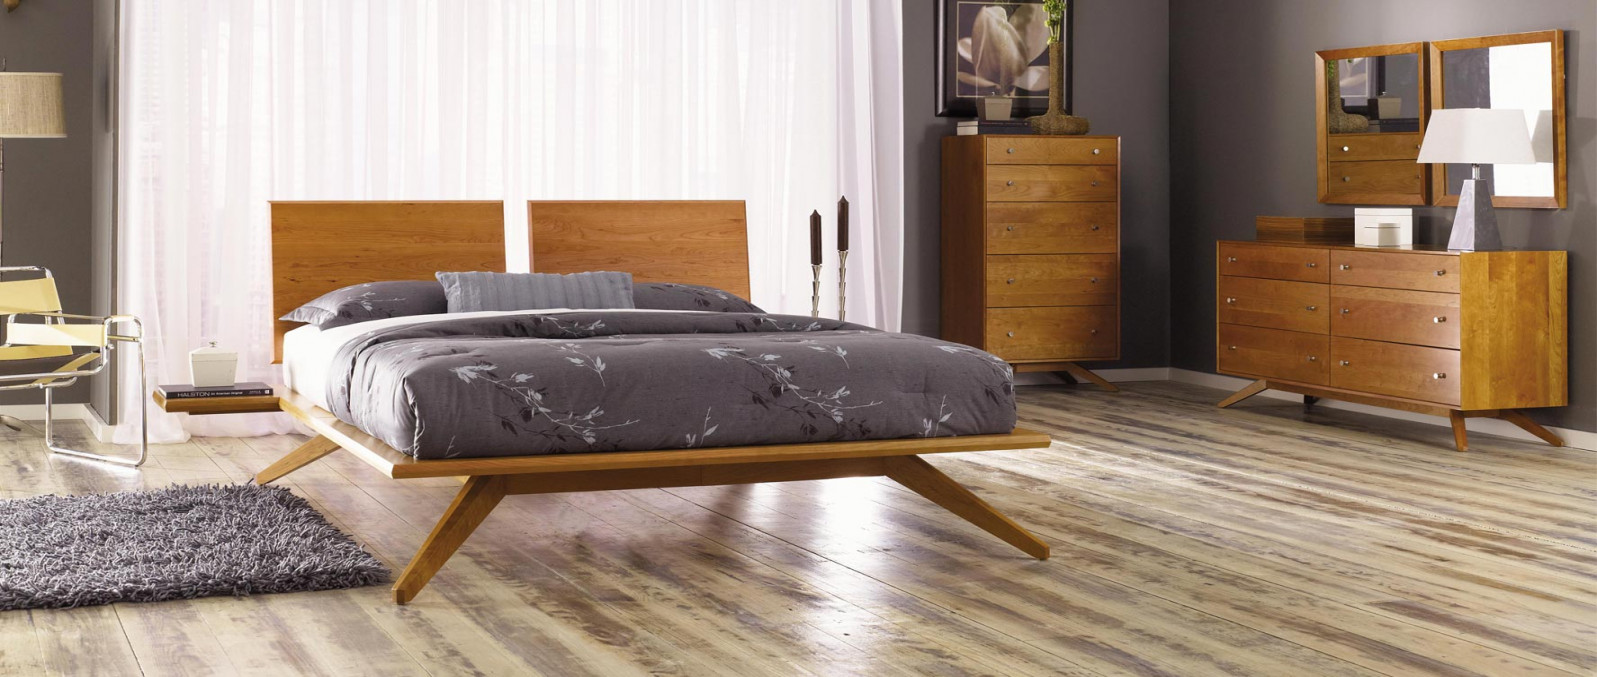 Mid Century Modern Bedroom Furniture